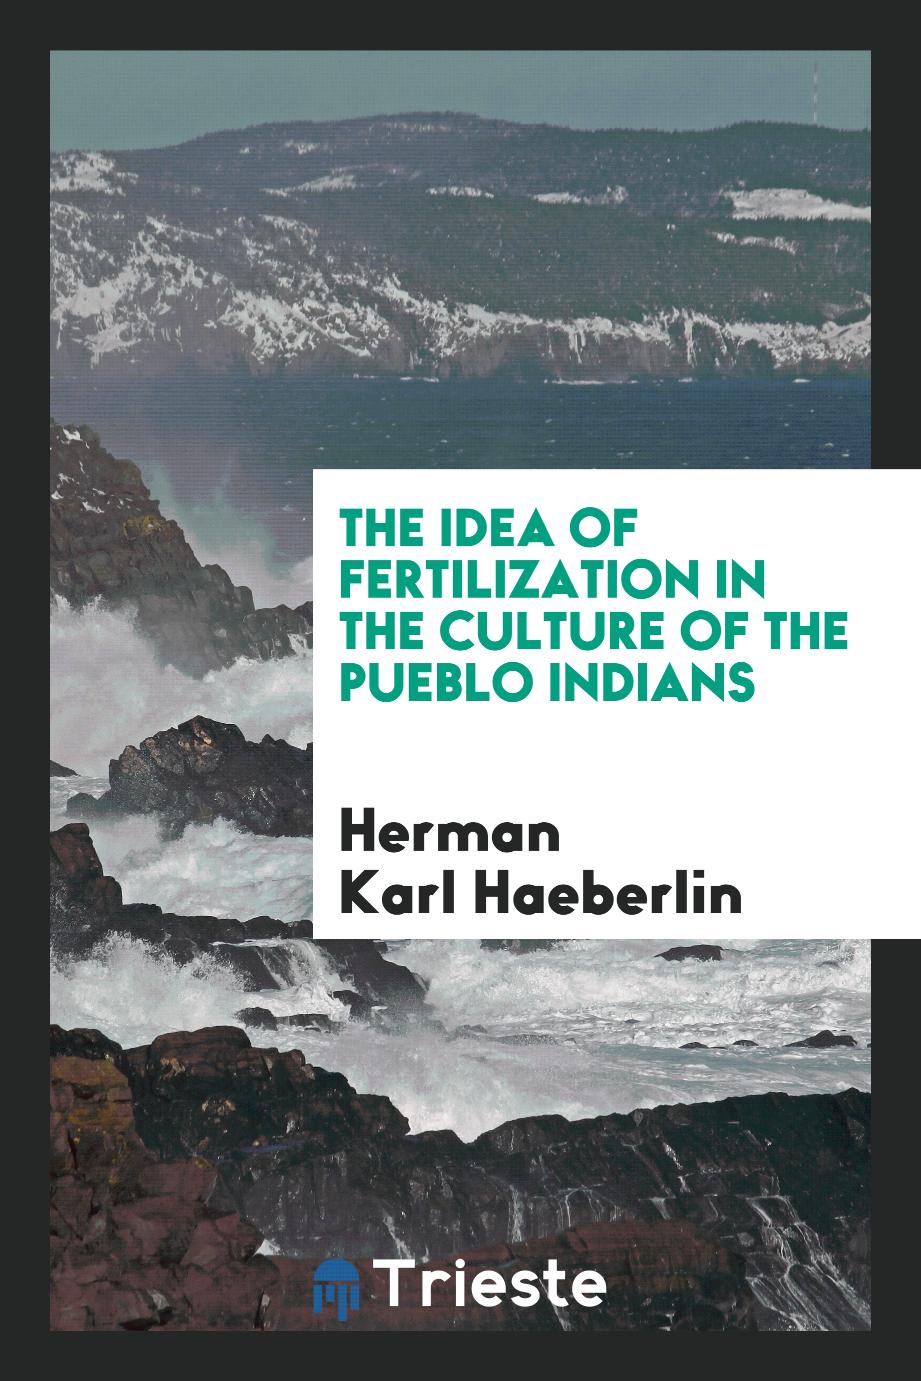 The idea of fertilization in the culture of the Pueblo Indians